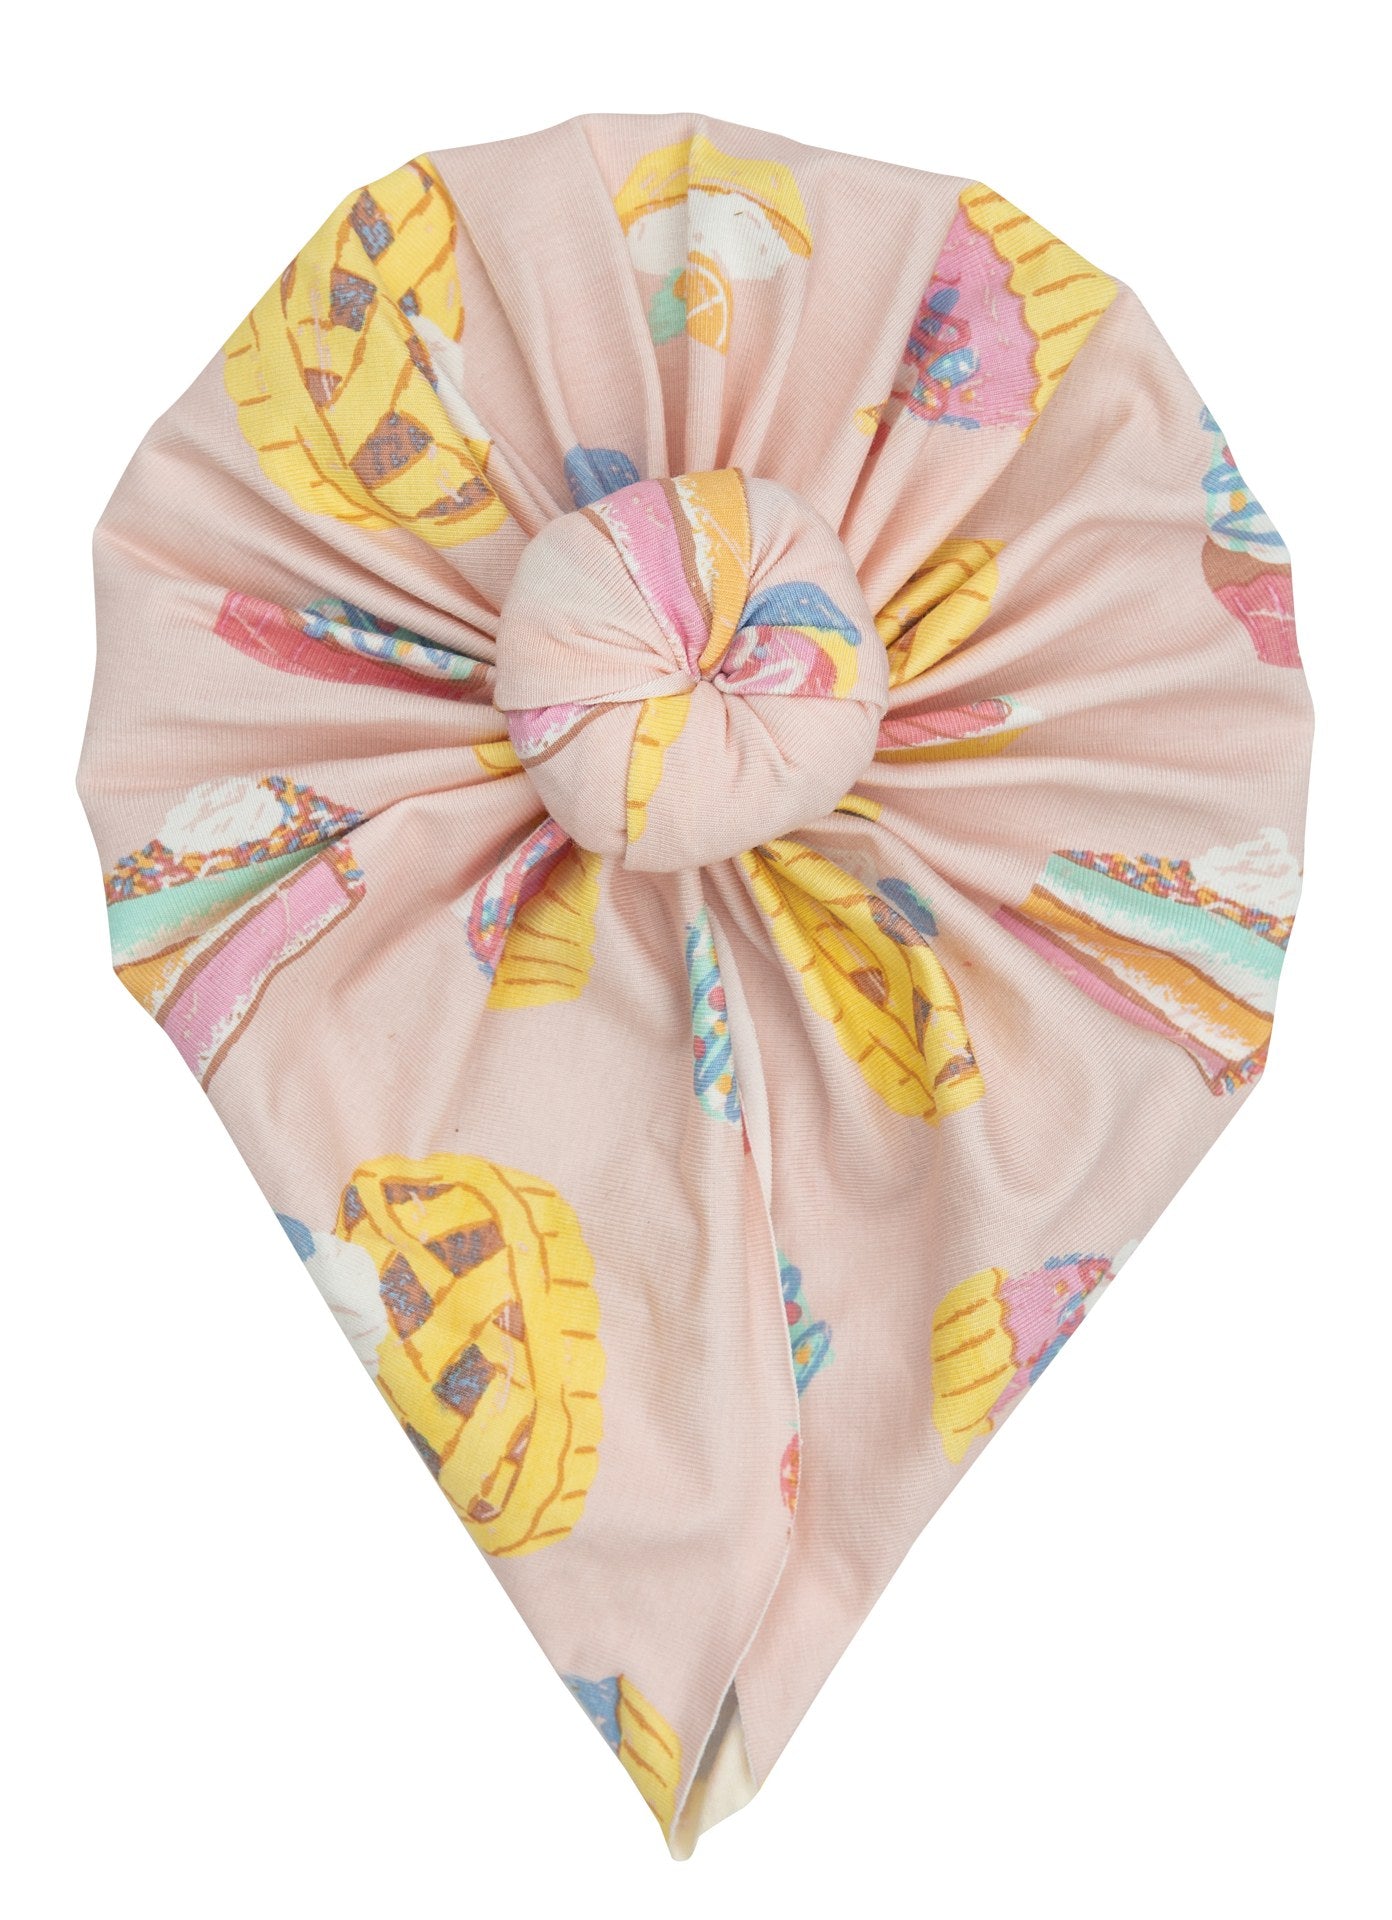 Headwrap in Sweetie Pies  - Doodlebug's Children's Boutique